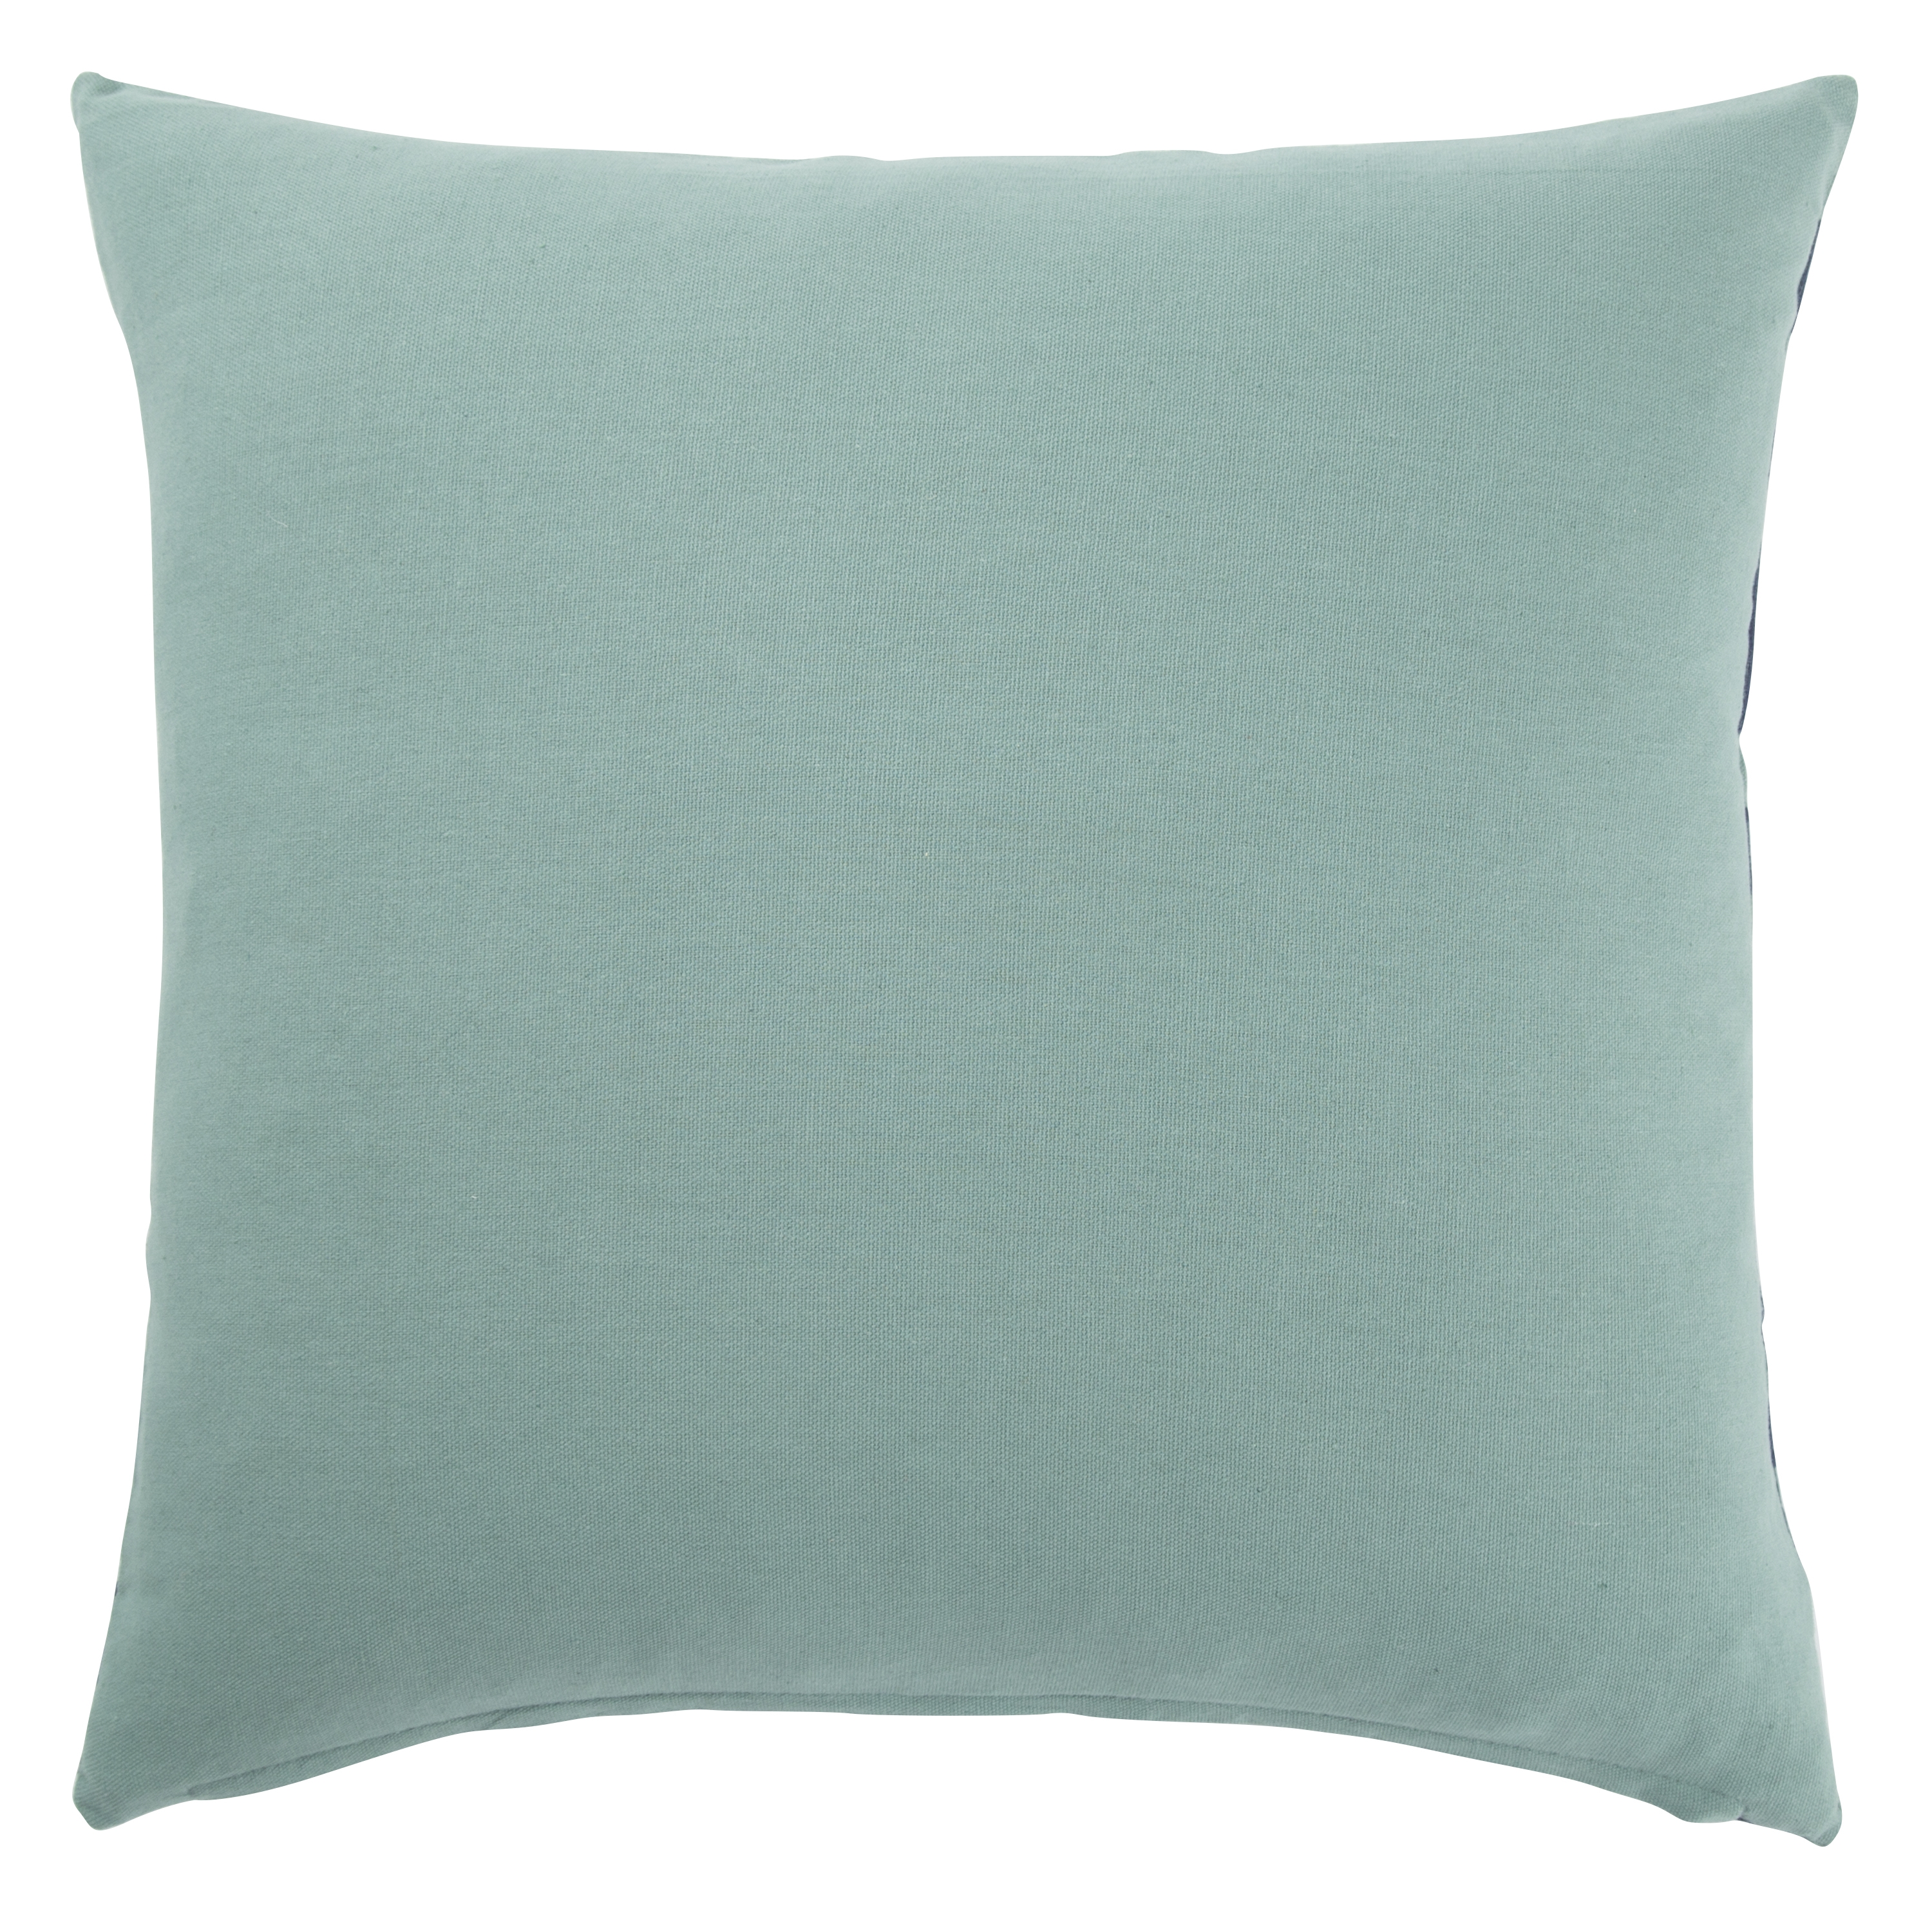 Design (US) Indigo 18"X18" Pillow - Image 1